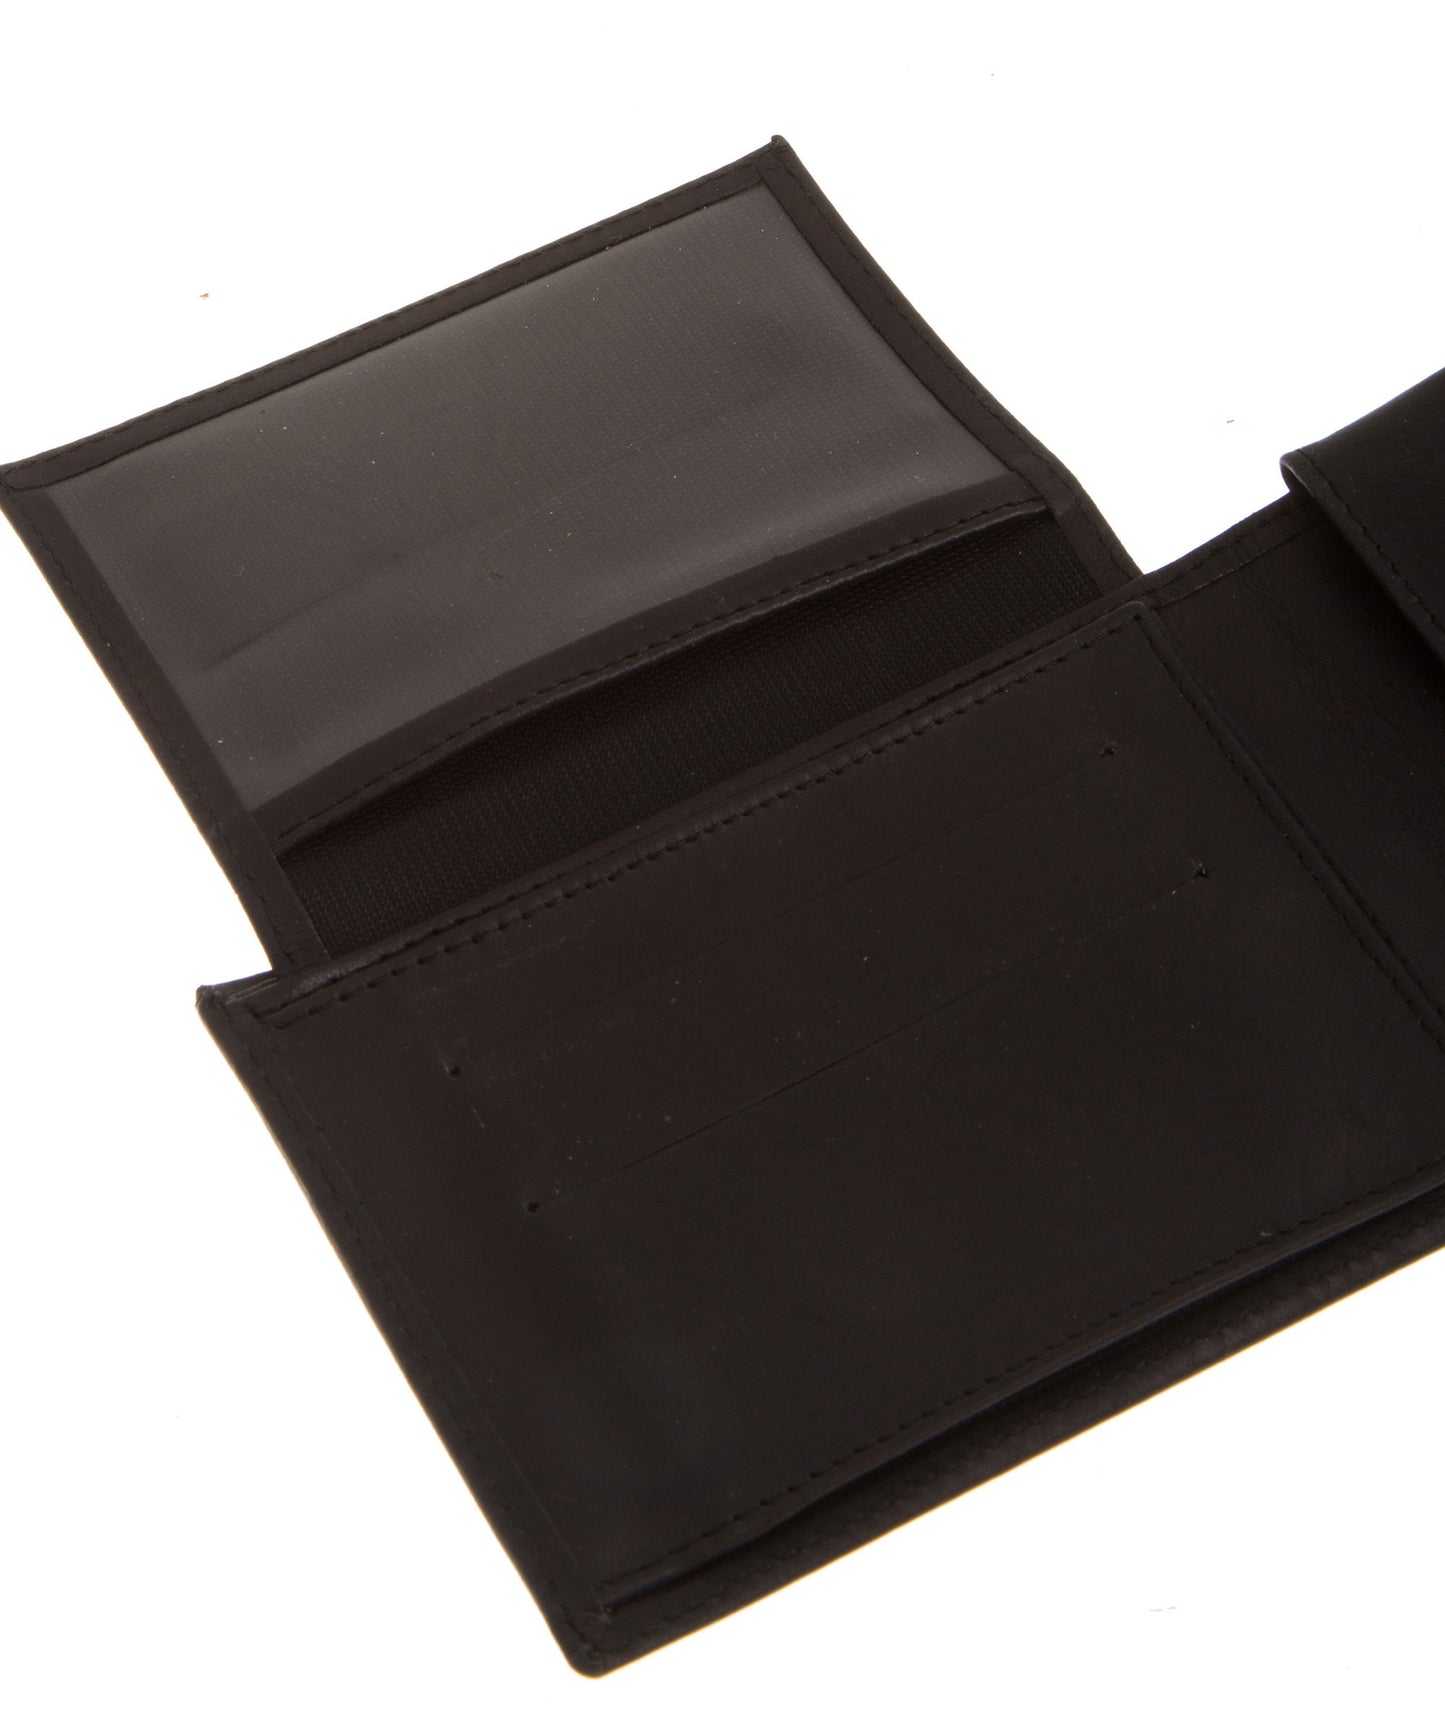 Black leather men's wallet, Minimalist genuine leather wallet, Full grain leather handmade wallet for men, Men's leather accessories